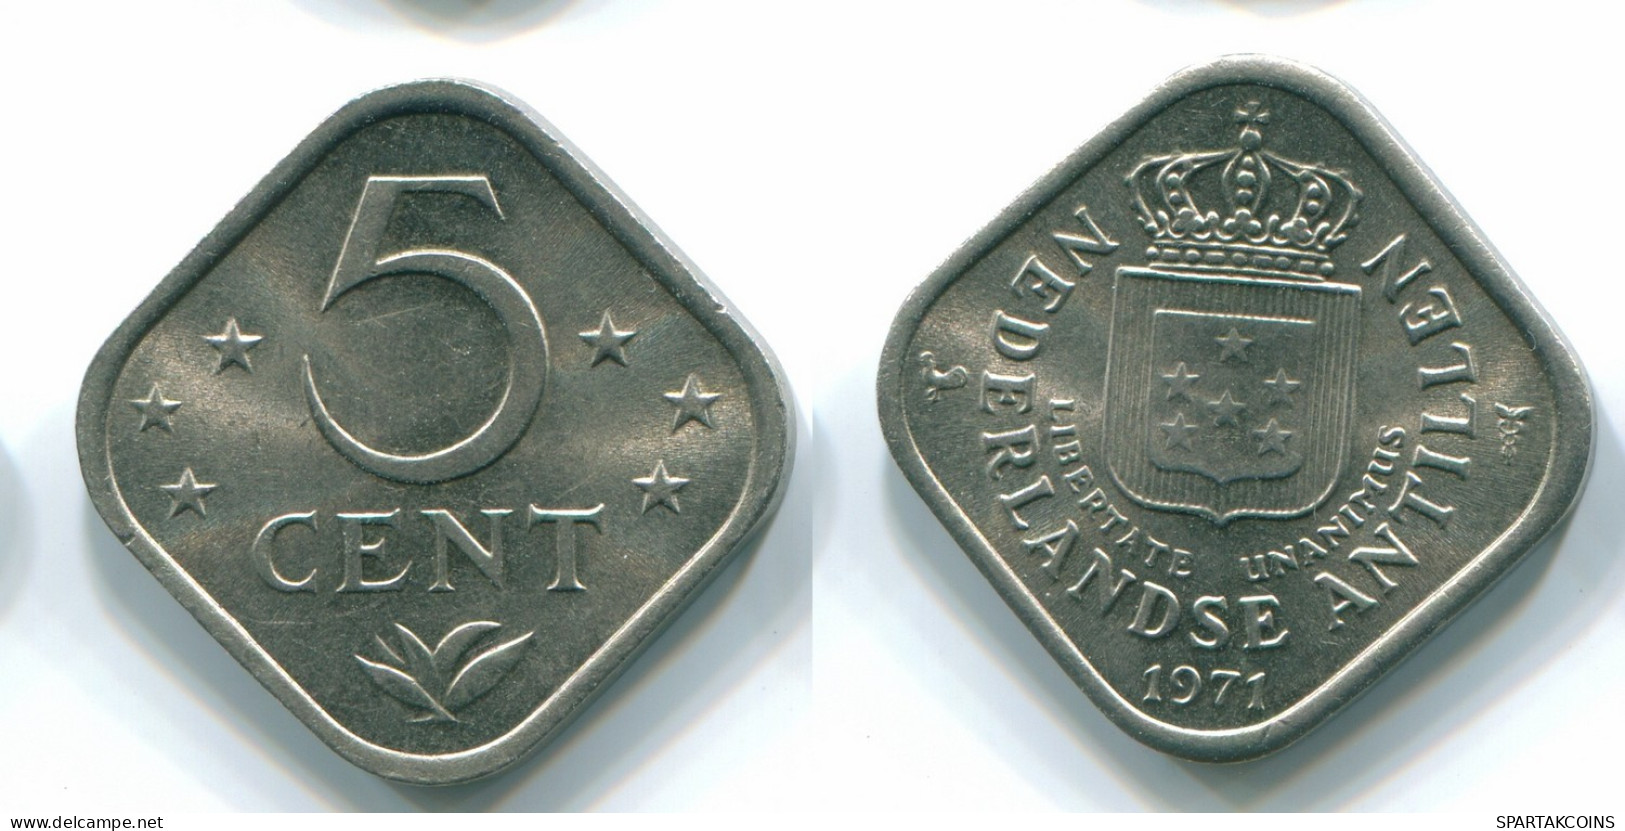 5 CENTS 1971 NIEDERLÄNDISCHE ANTILLEN Nickel Koloniale Münze #S12208.D.A - Netherlands Antilles